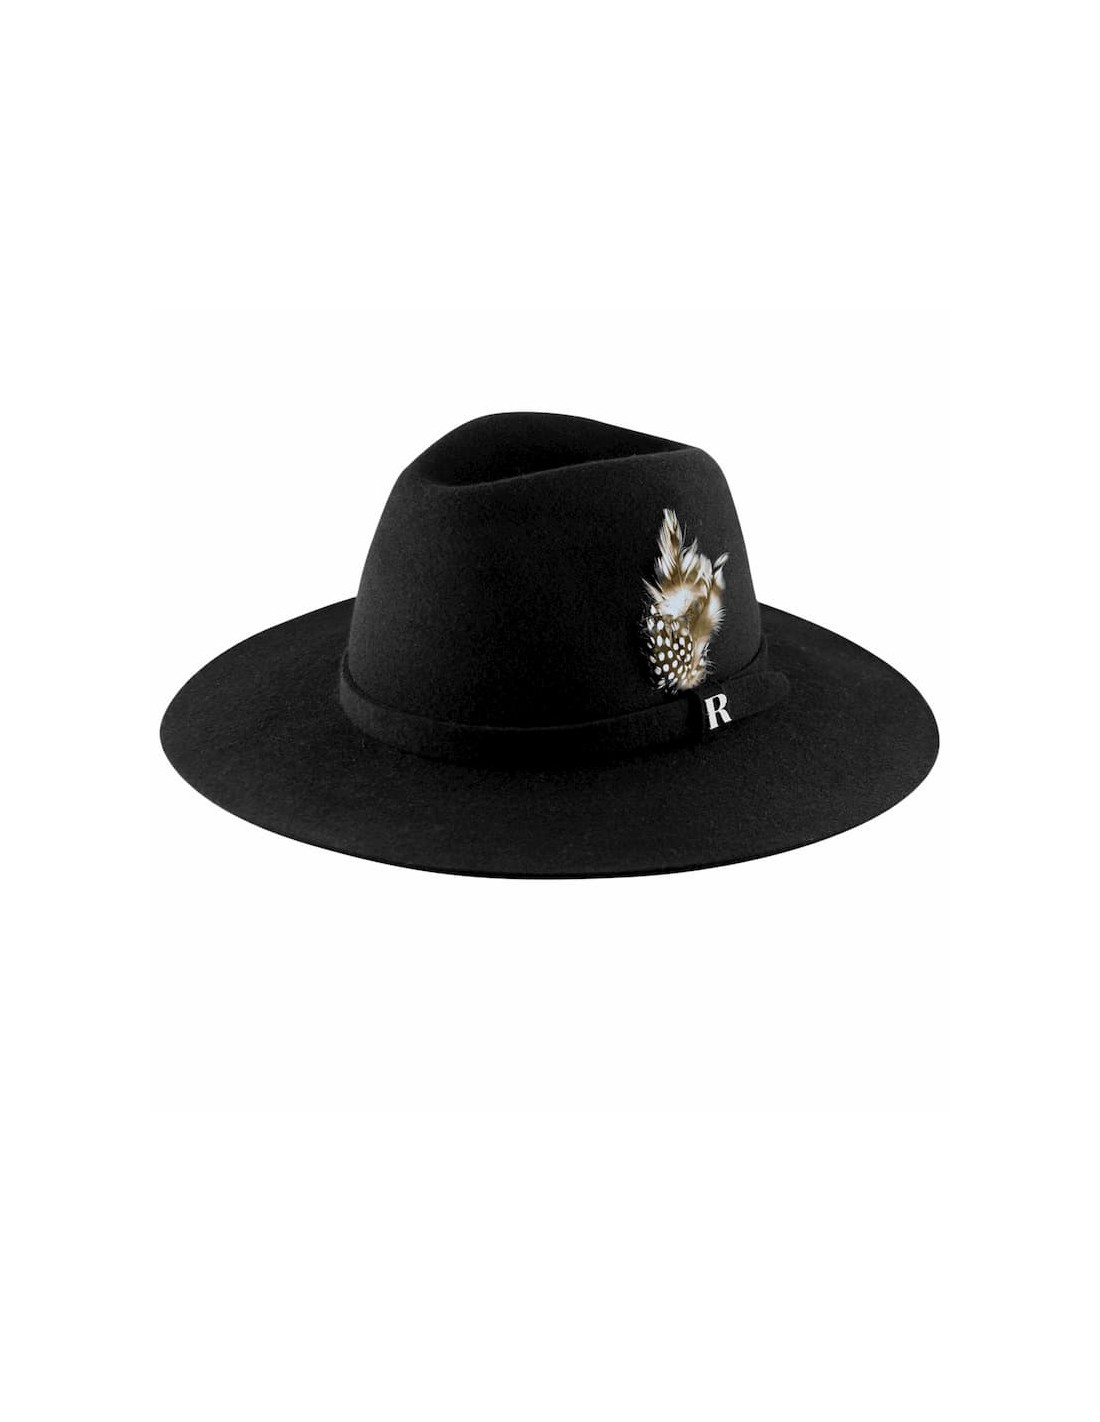 Black Salter Fedora Hat for Men - Fedora Wool Felt - Raceu Hats Online